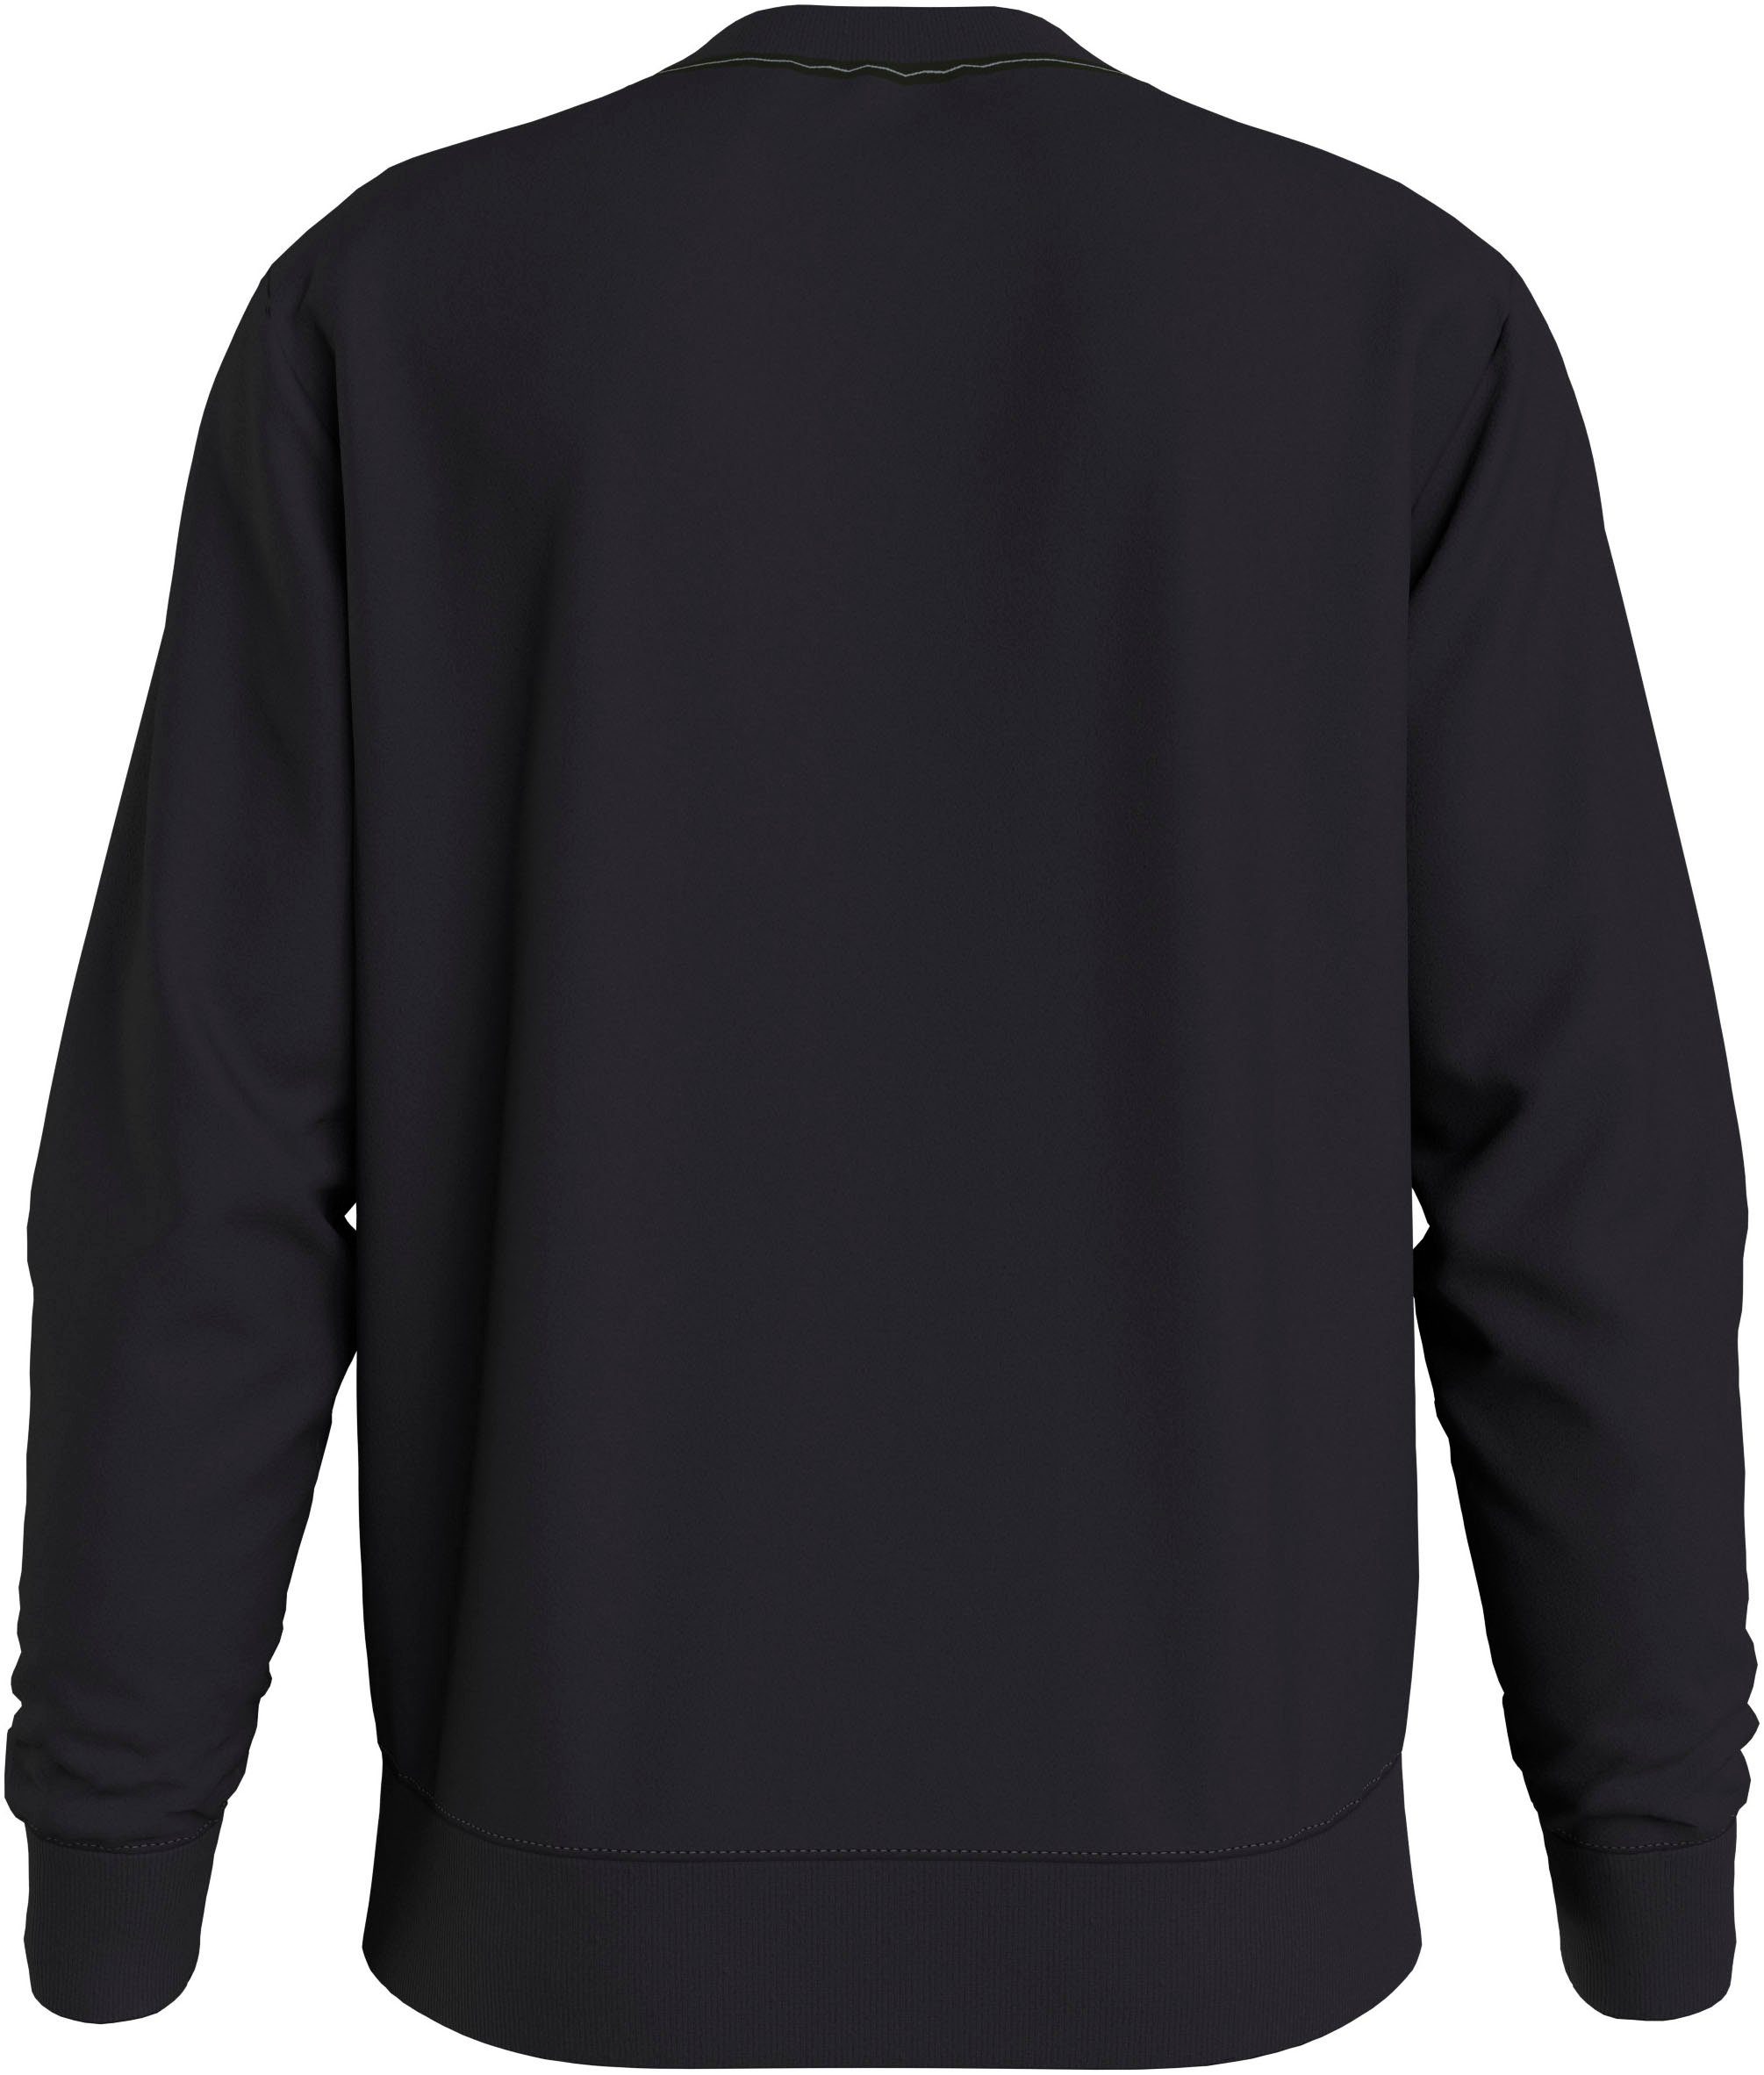 Calvin Klein Jeans Sweatshirt Black CREW Ck VARSITY NECK CURVE